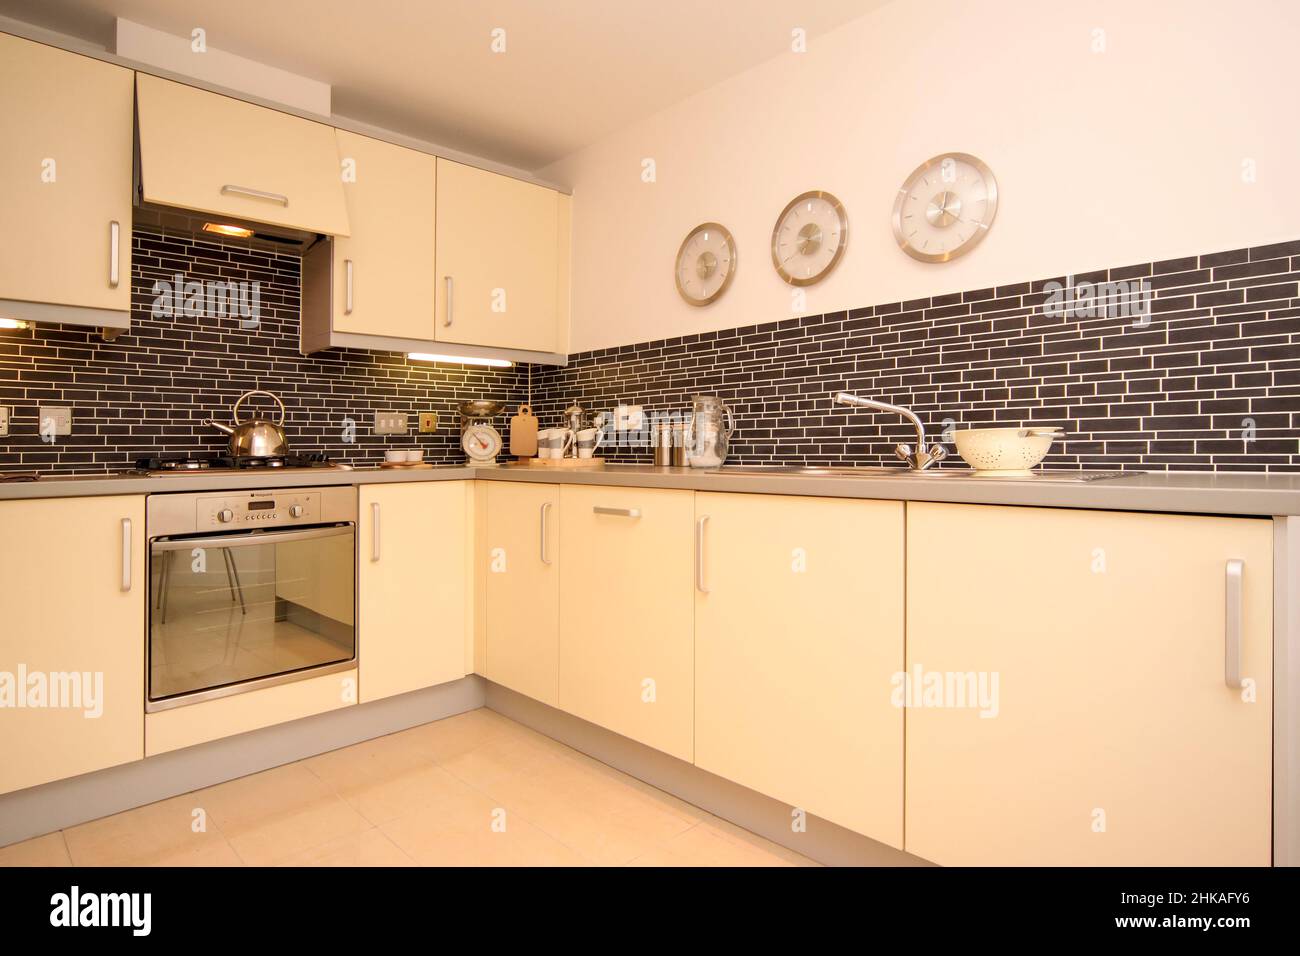 Pale yellow modern kitchen, tiled floor and walls, cooker hood, modern scheme. Stock Photo